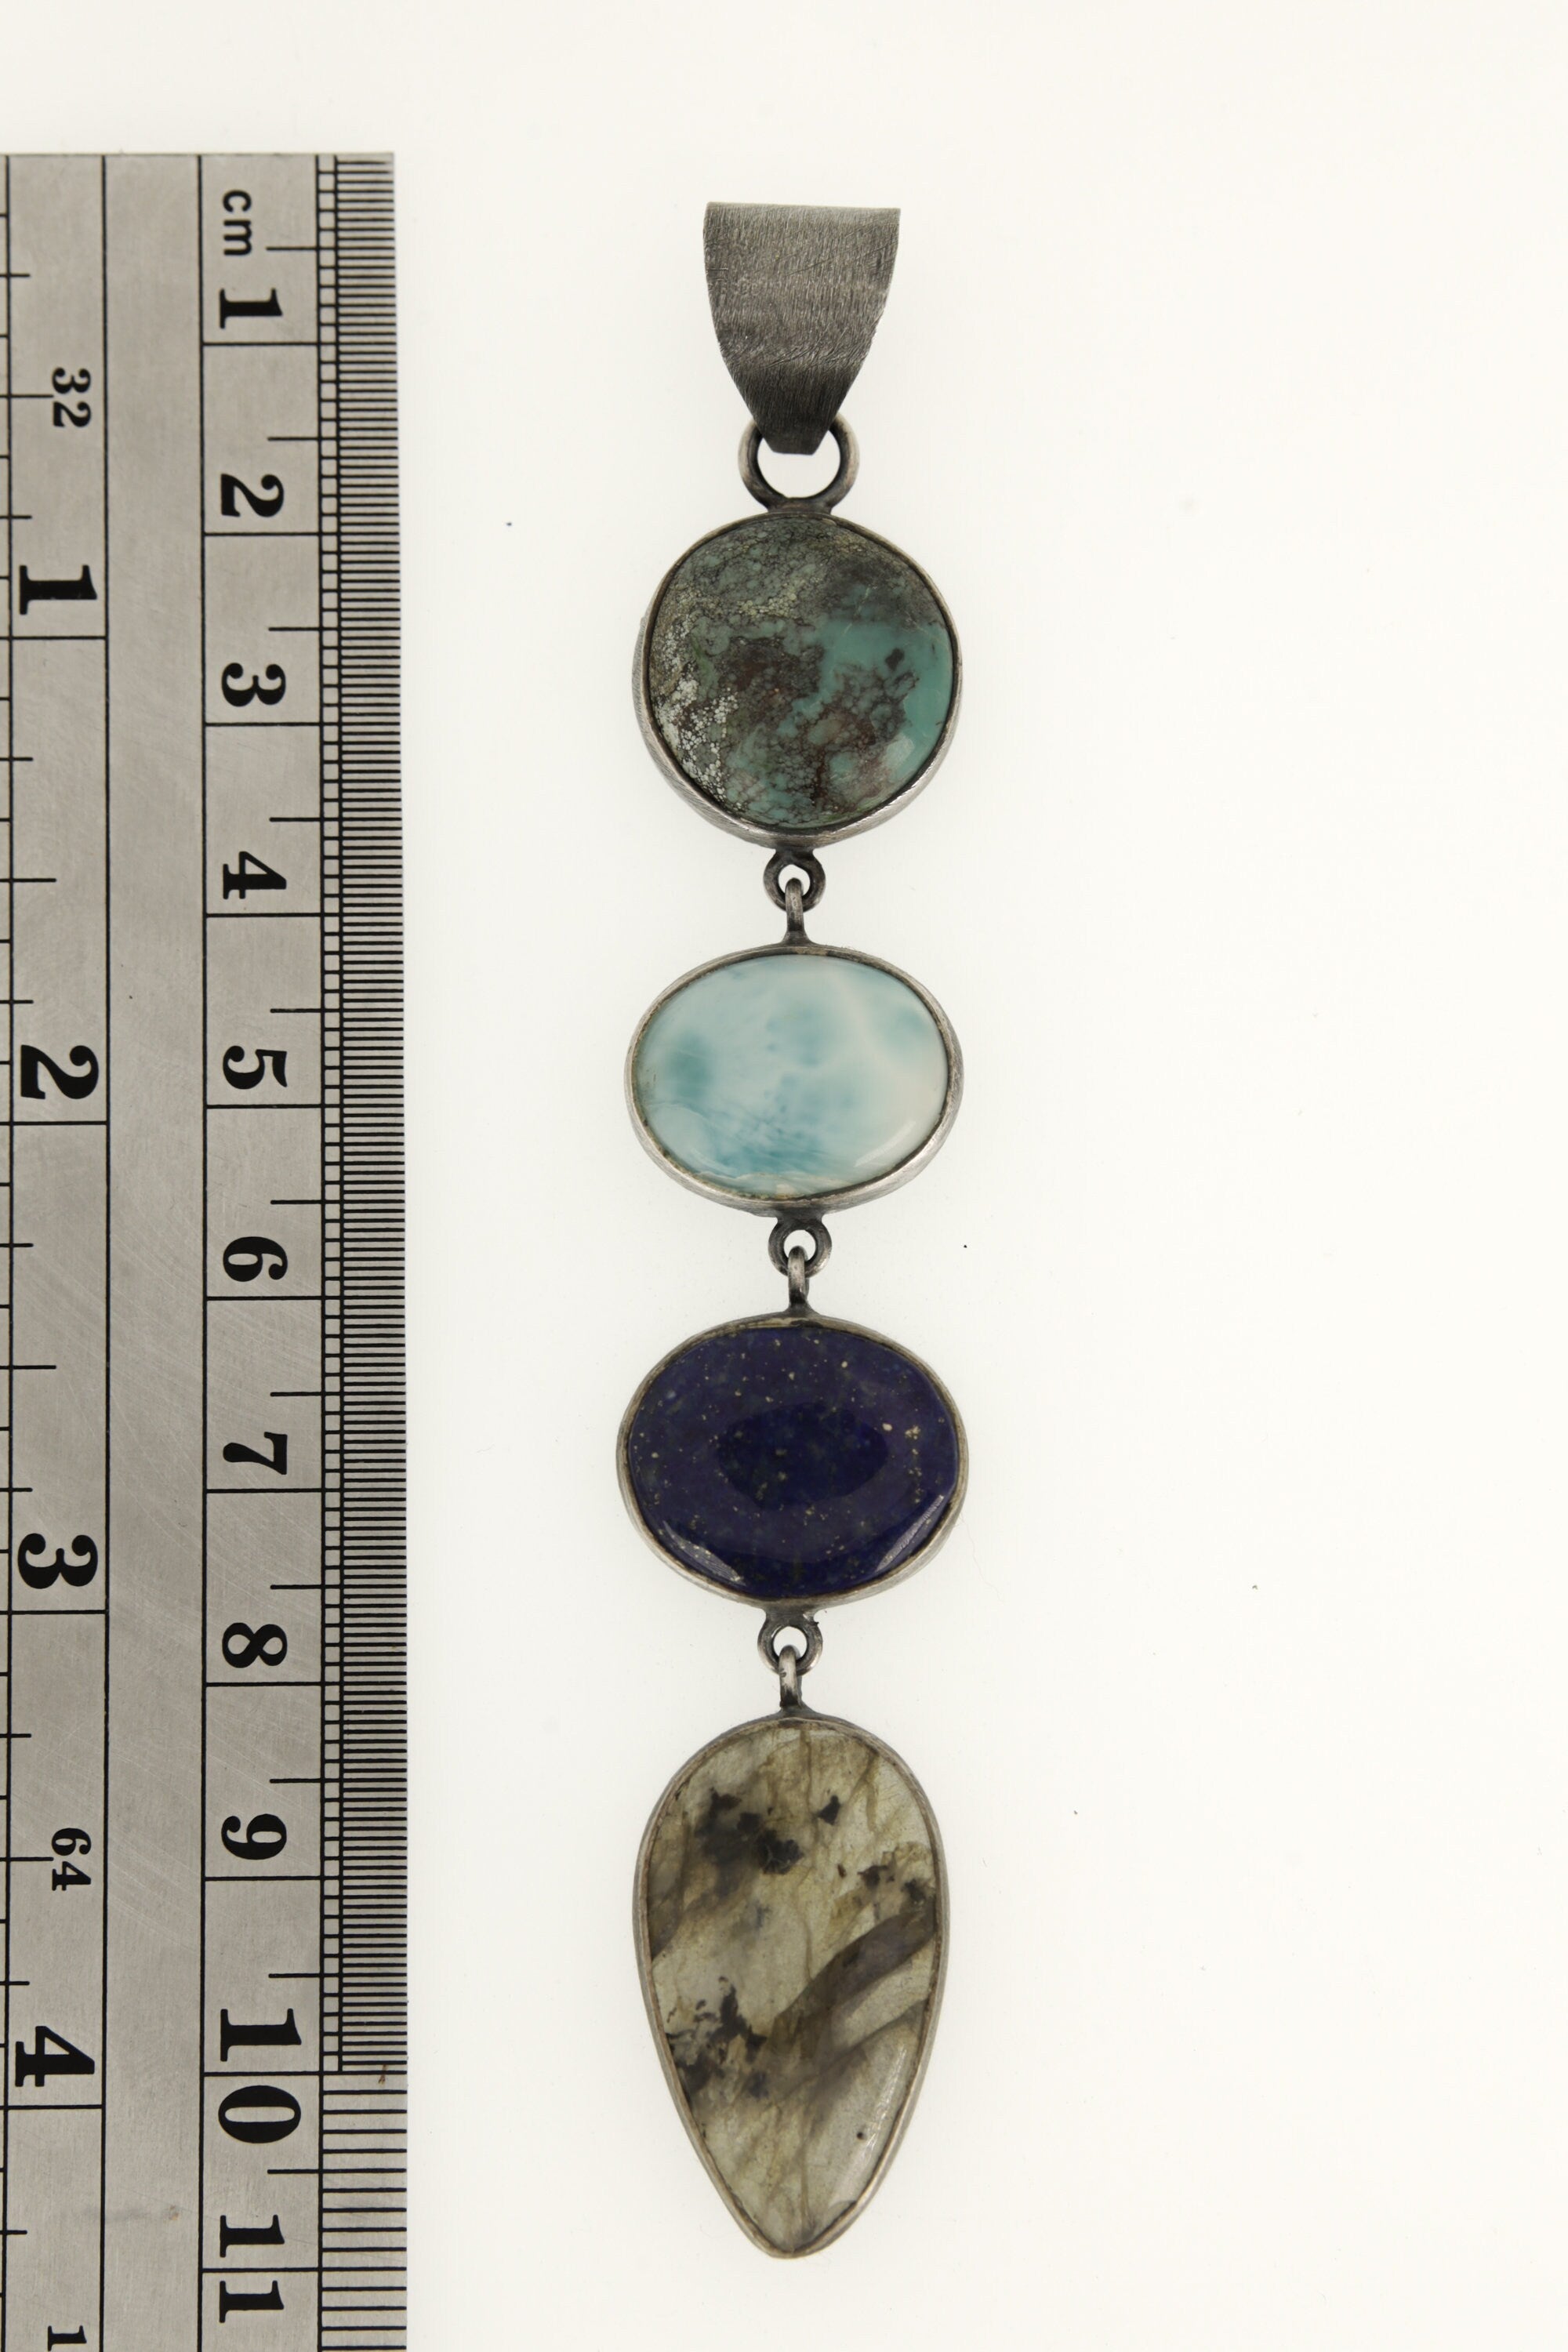 Azure Mosaic : Sterling Silver Pendant with Turquoise, Larimar, Lapis Lazuli, and Rutile Quartz - Oxidized Finish and Brush Texture